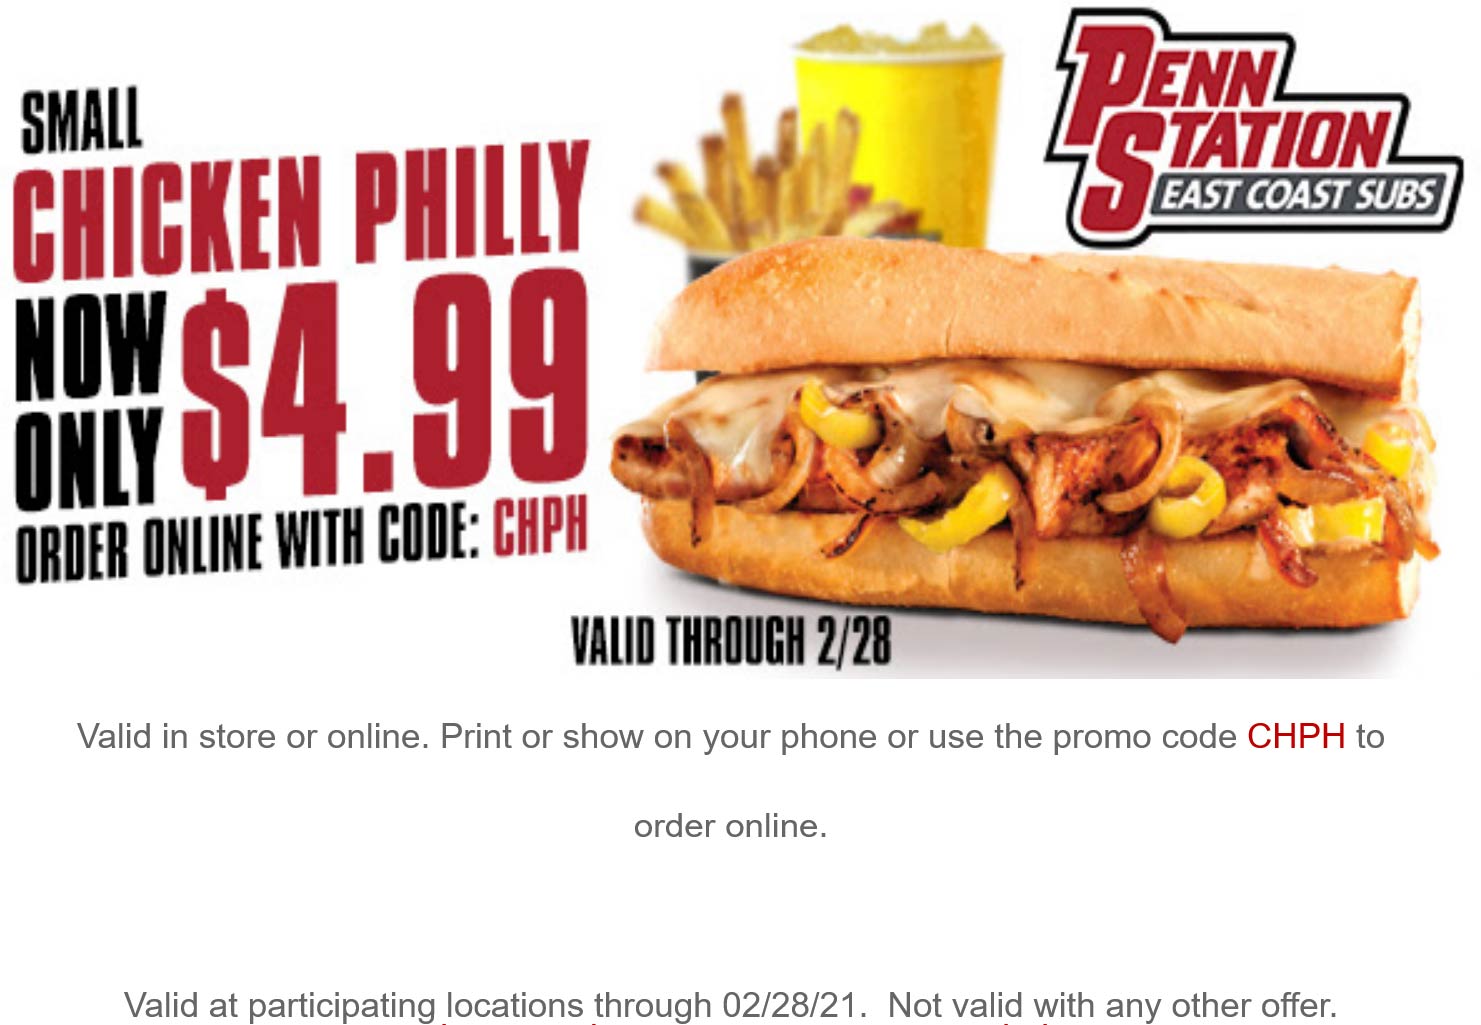 5 chicken philly sub sandwich at Penn Station via promo code CHPH 